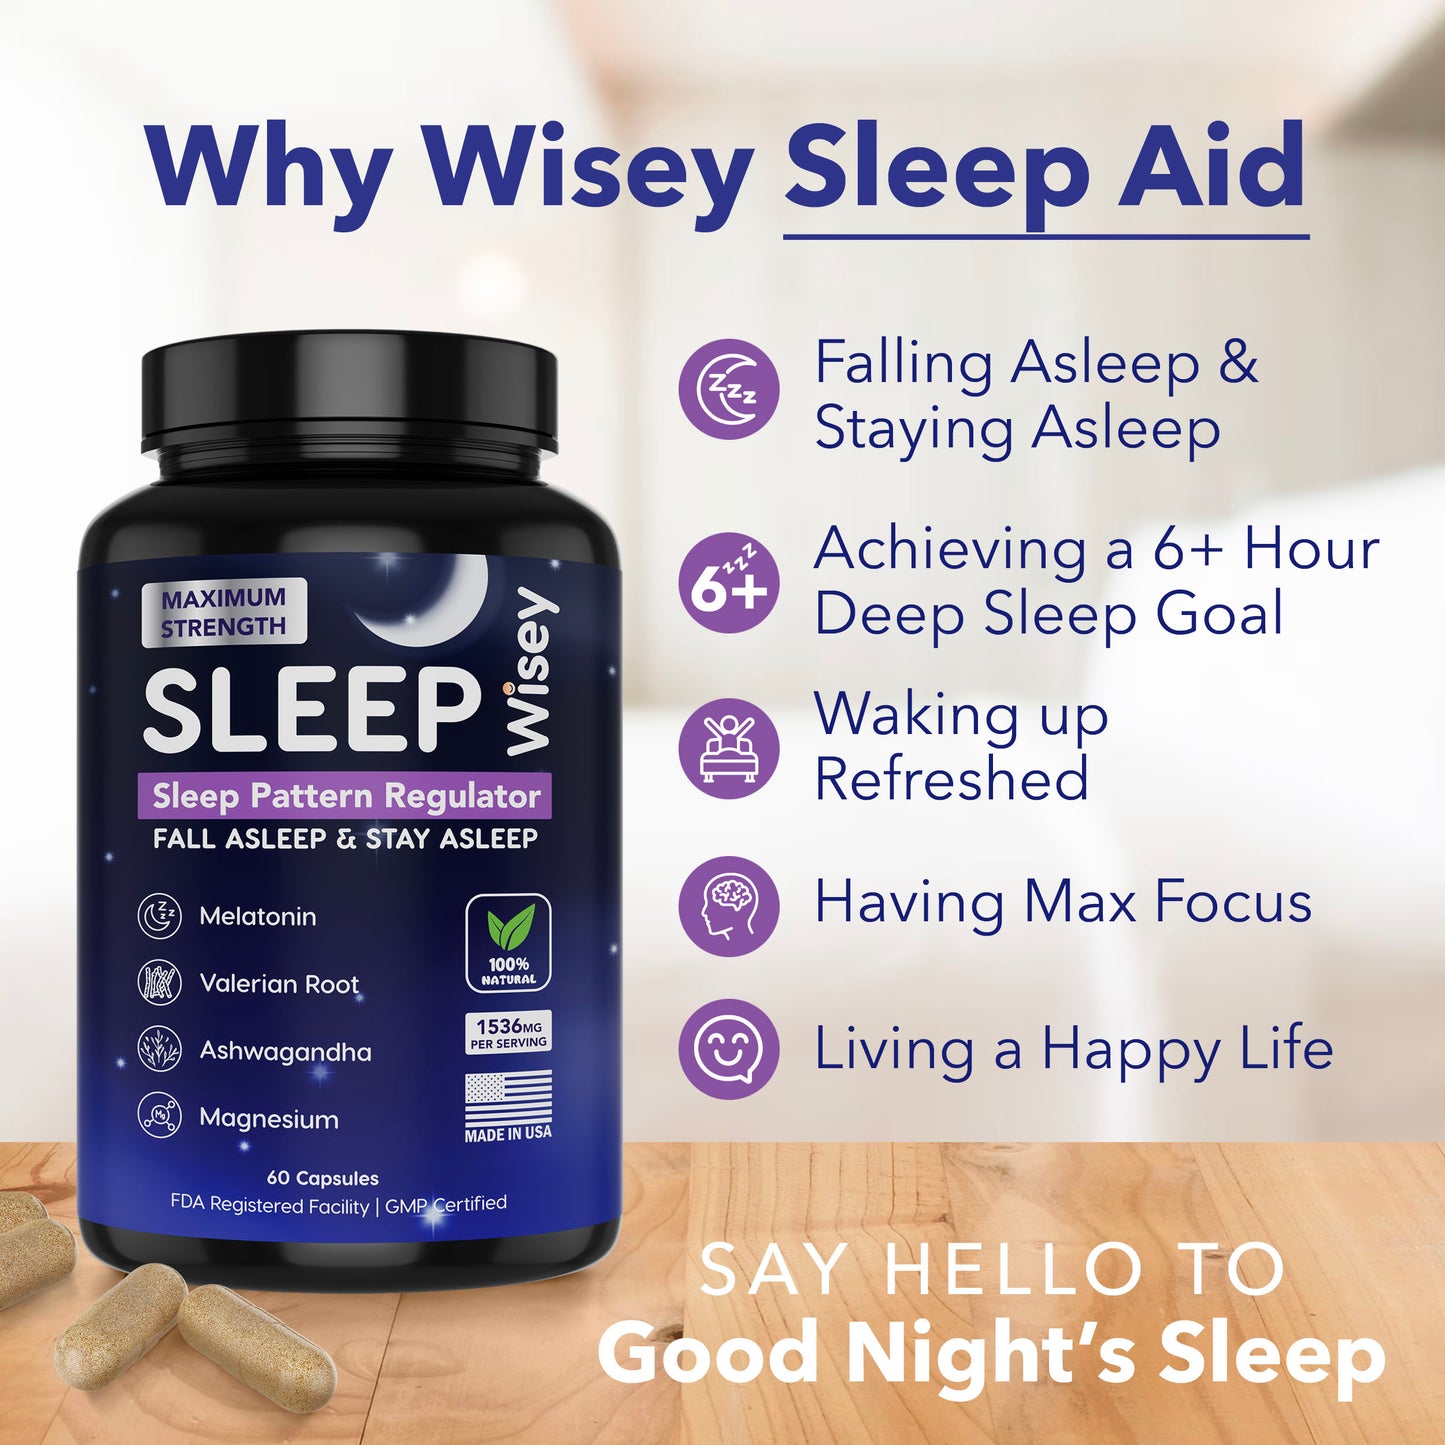 Wisey Natural Sleep Aid Samples - Wisey